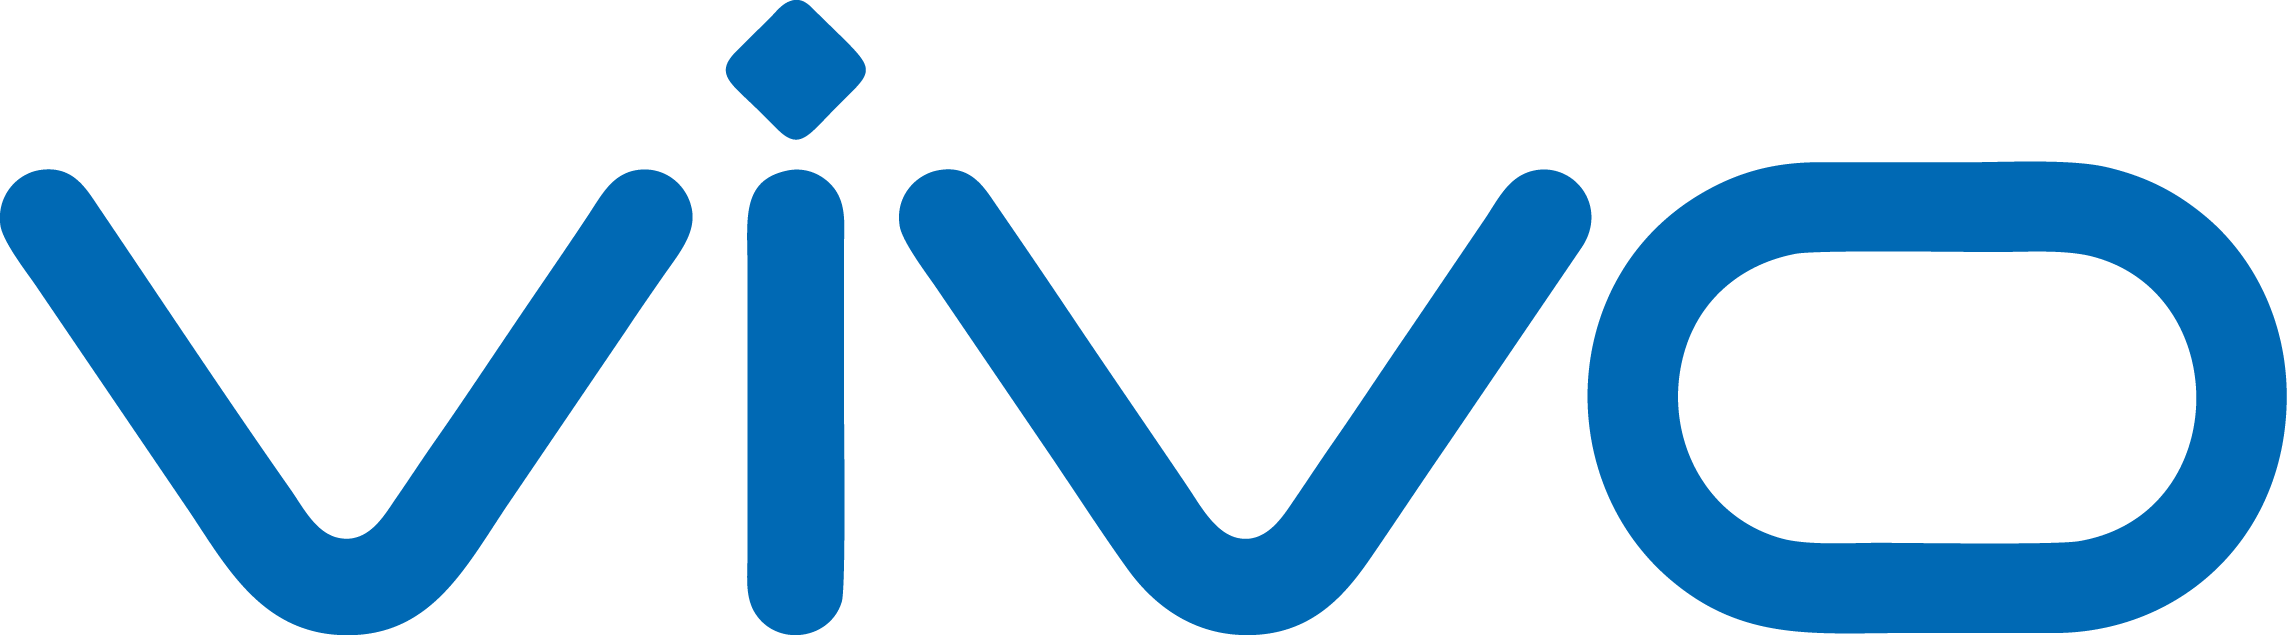 Vivo Logo - Smartphone - Company Logo Downloads